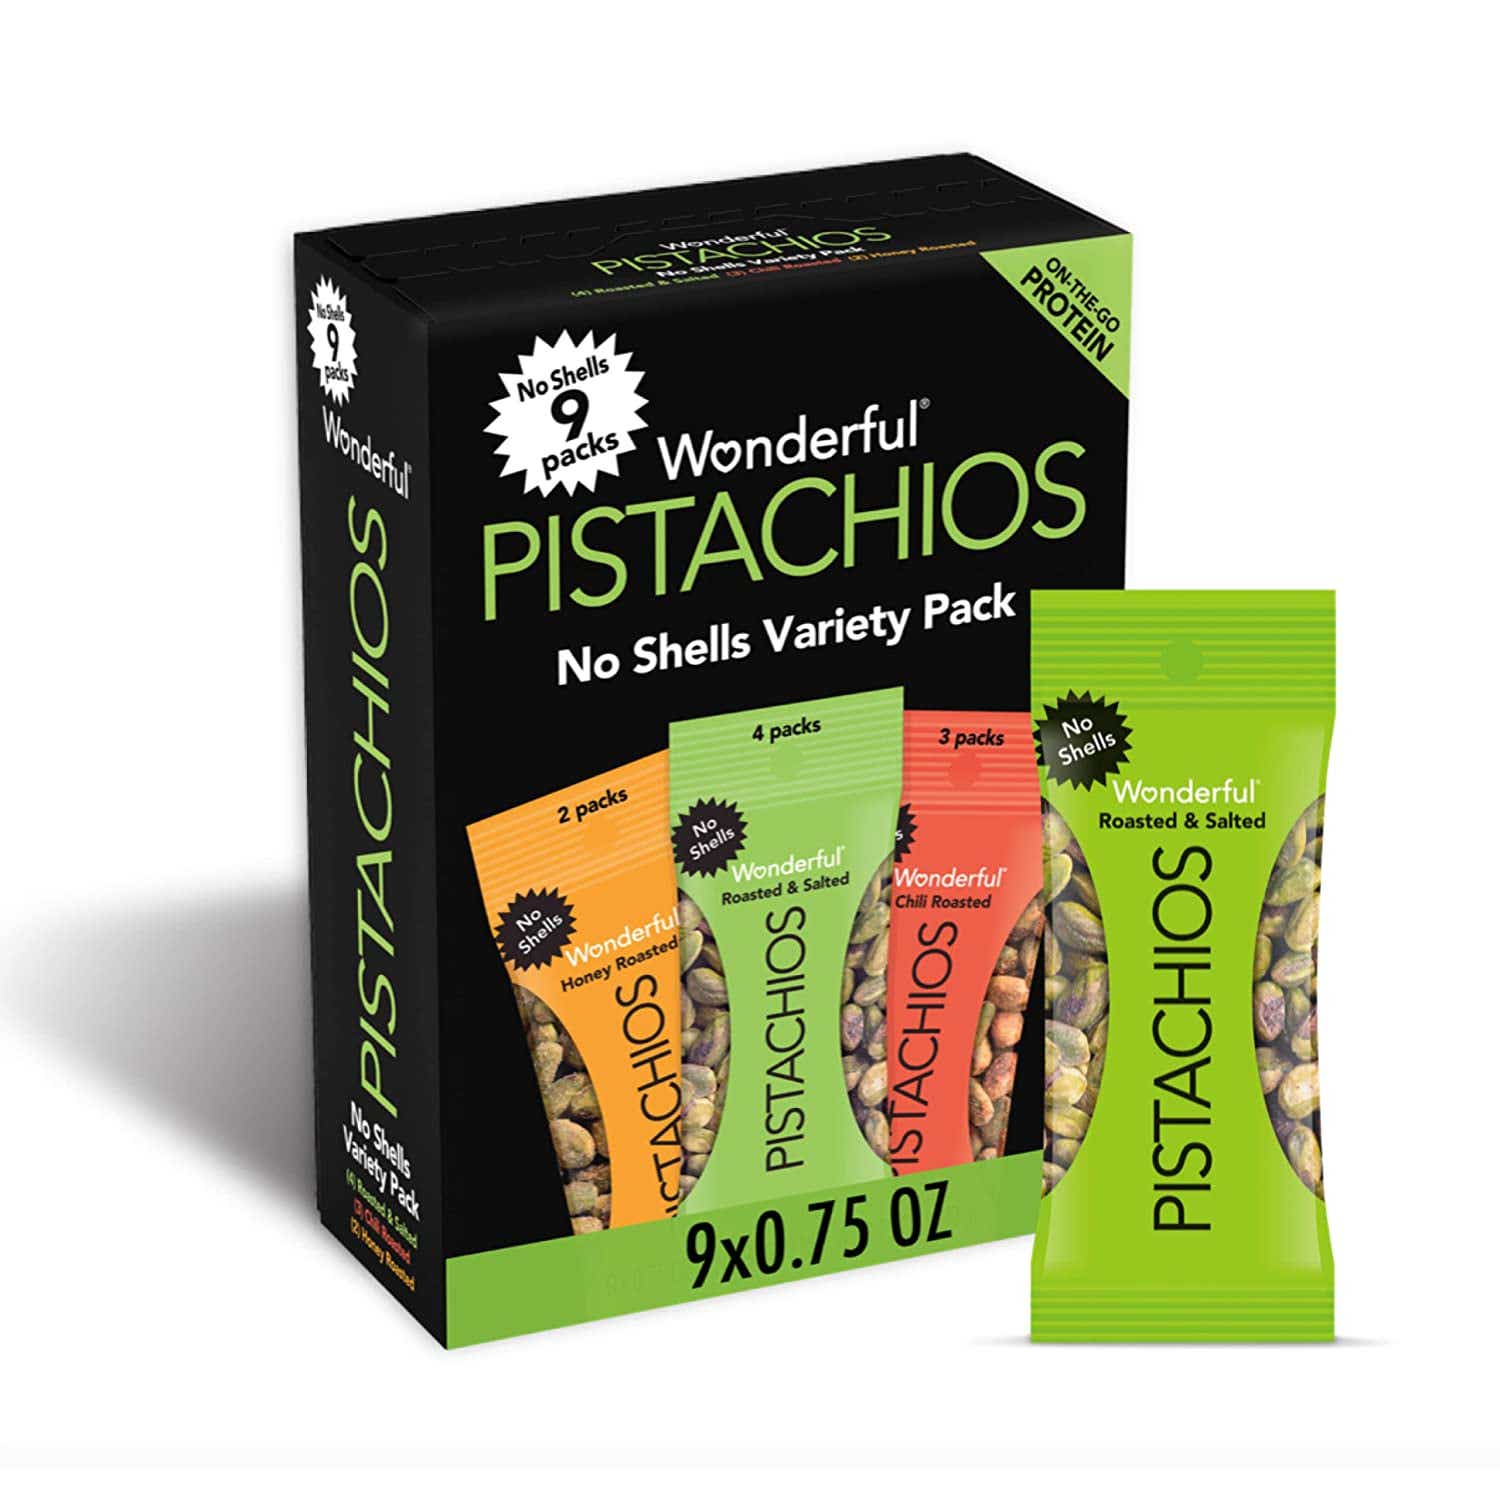 Wonderful Pistachios variety pack